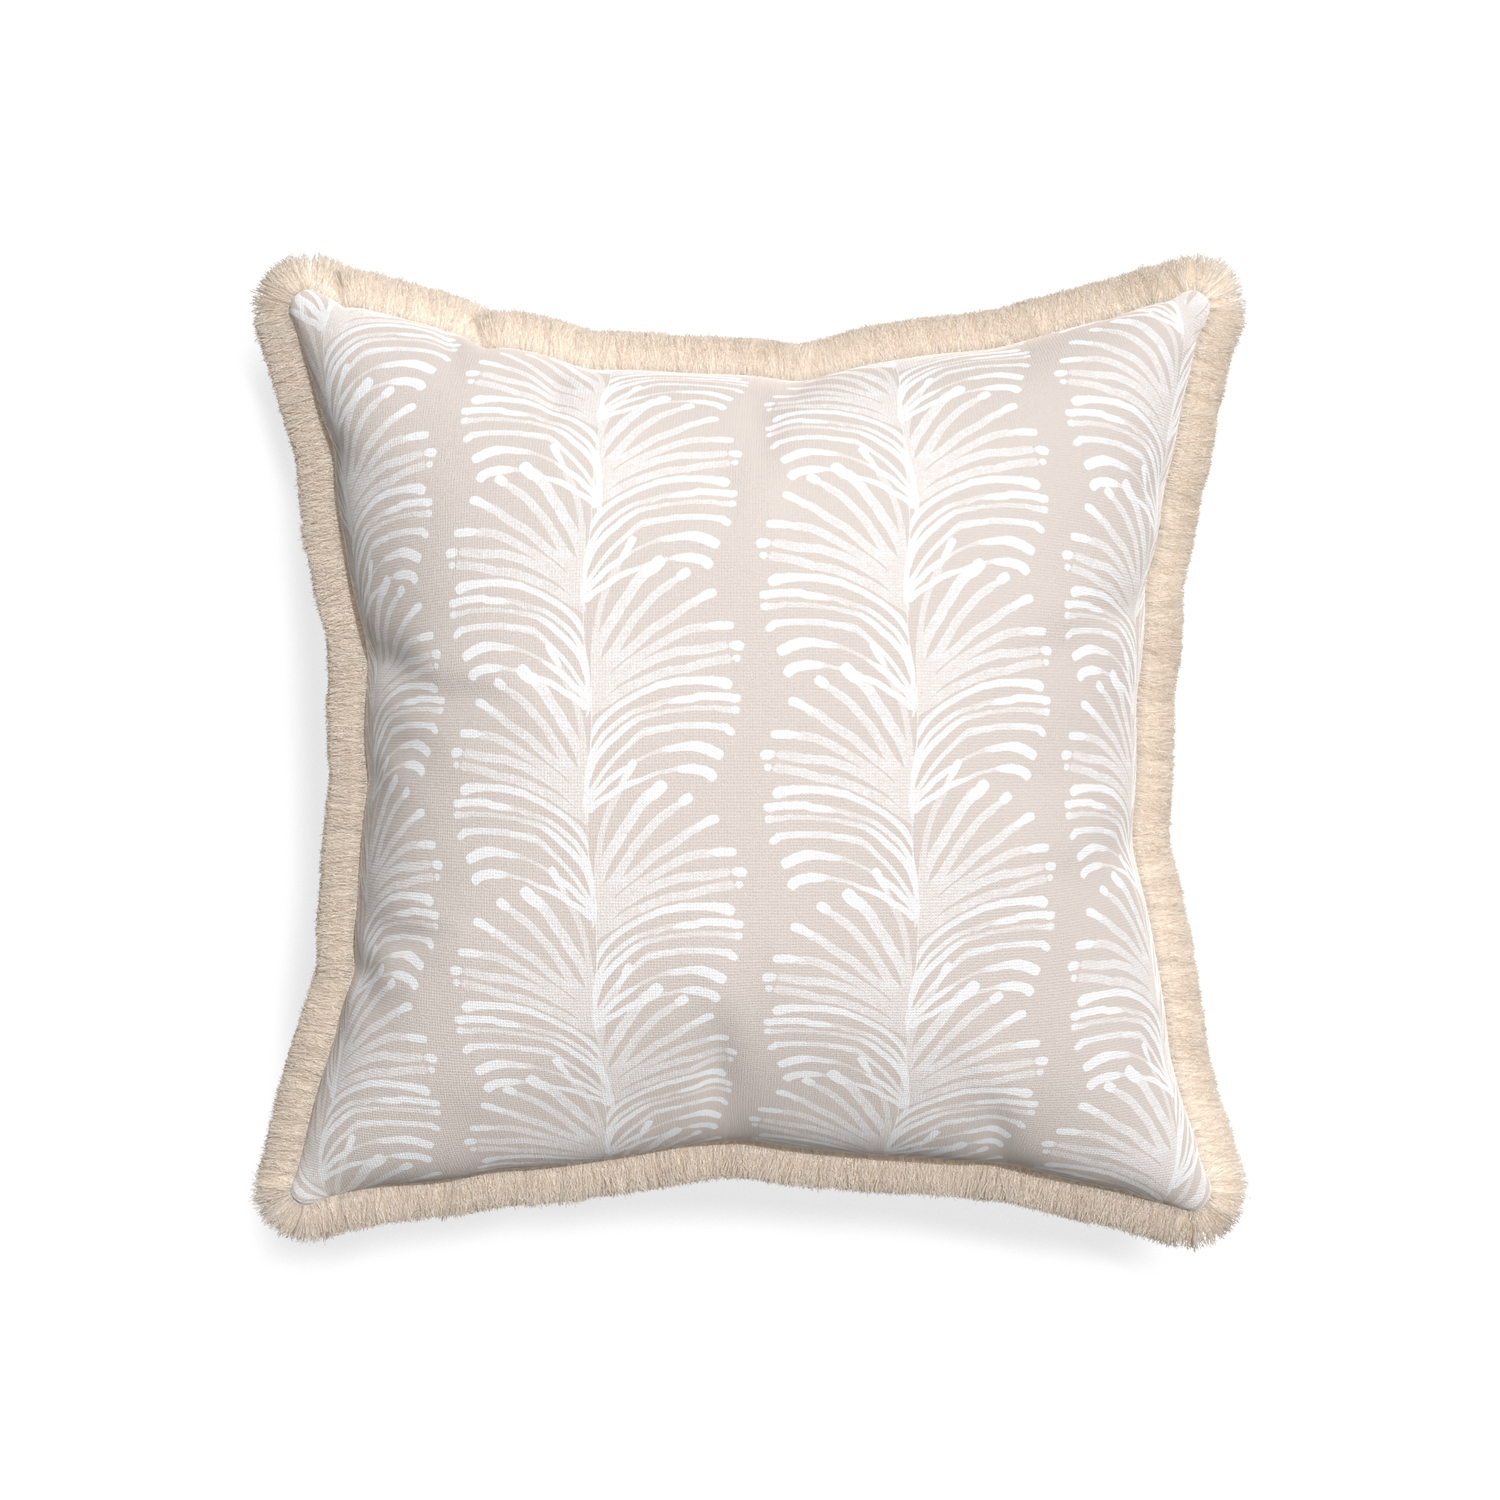 20-square emma sand custom pillow with cream fringe on white background